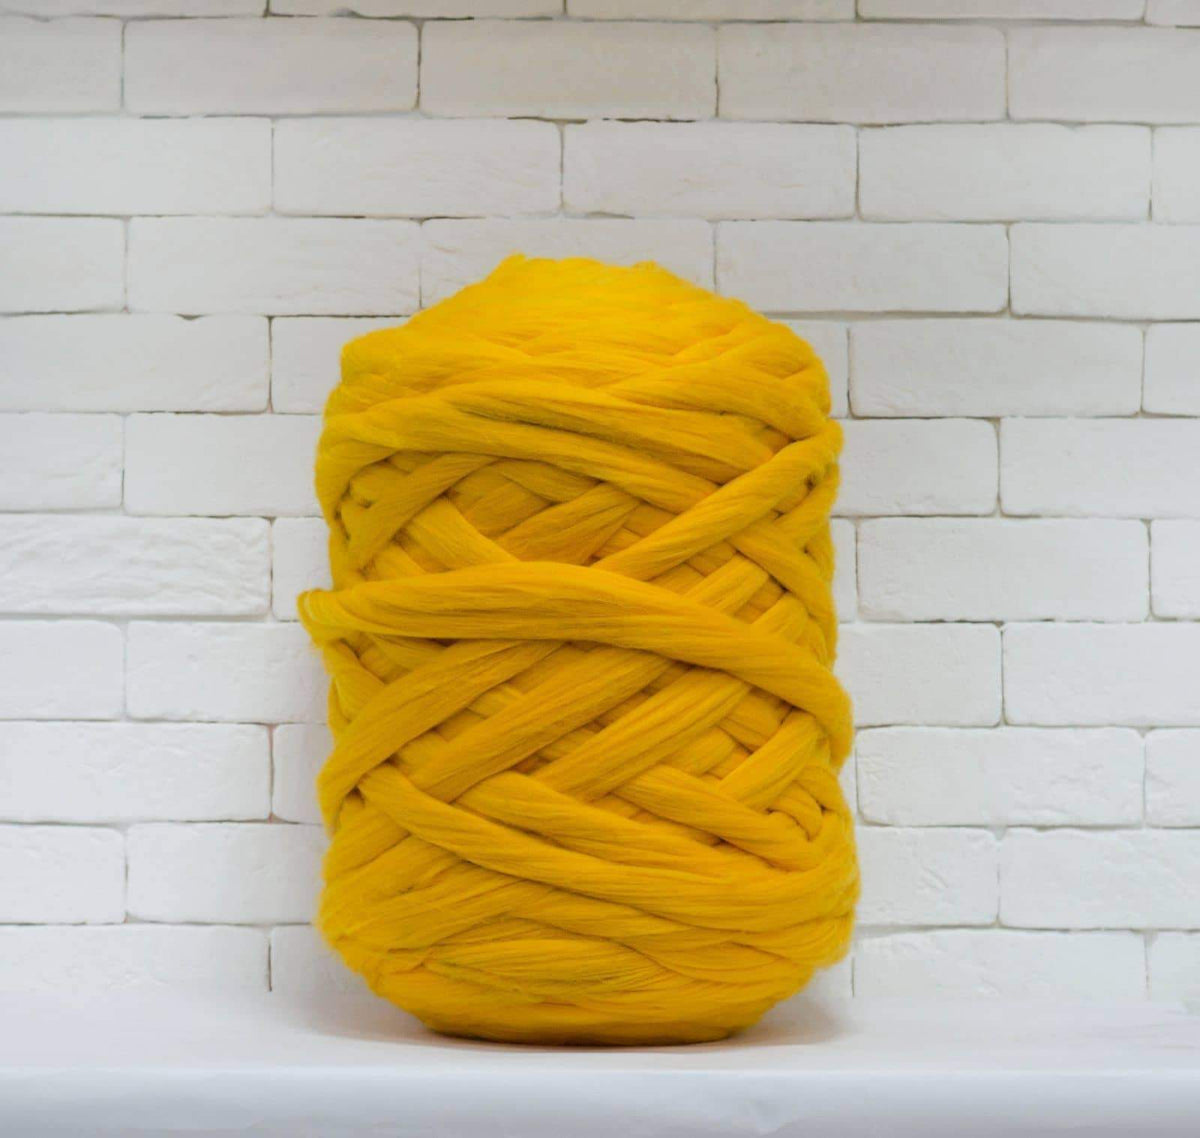 Roving Yarn Merino Knitting Chunky Yarn Pure Wool Bulky Yarn Merino Thick  Yarn for Chunky Knitting, 6 Colors, 100g 